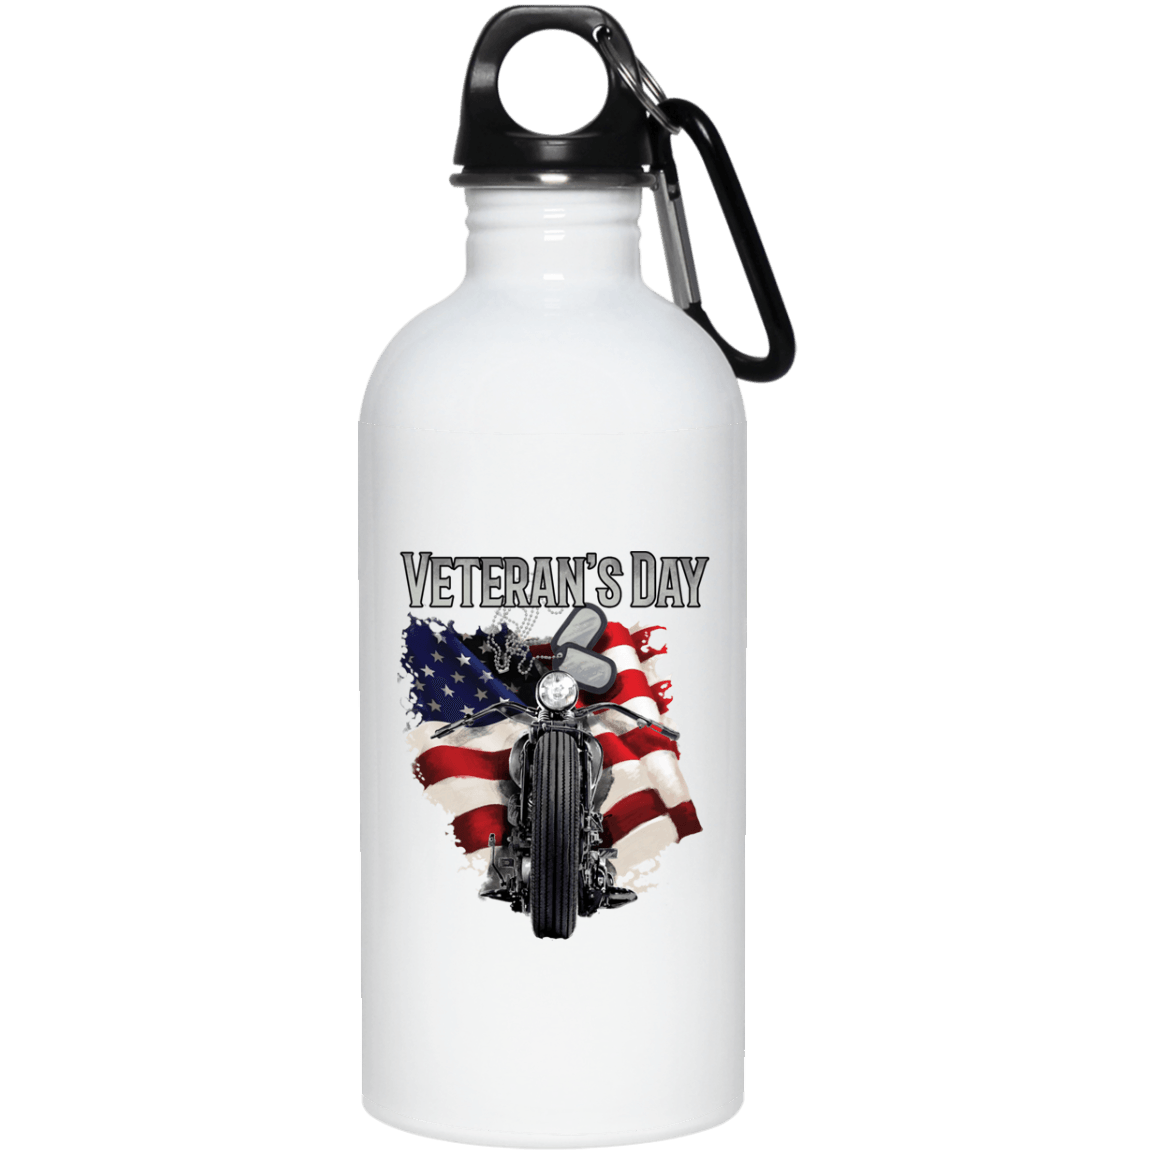 Veteran's Day Water Bottle 20 oz. - American Legend Rider